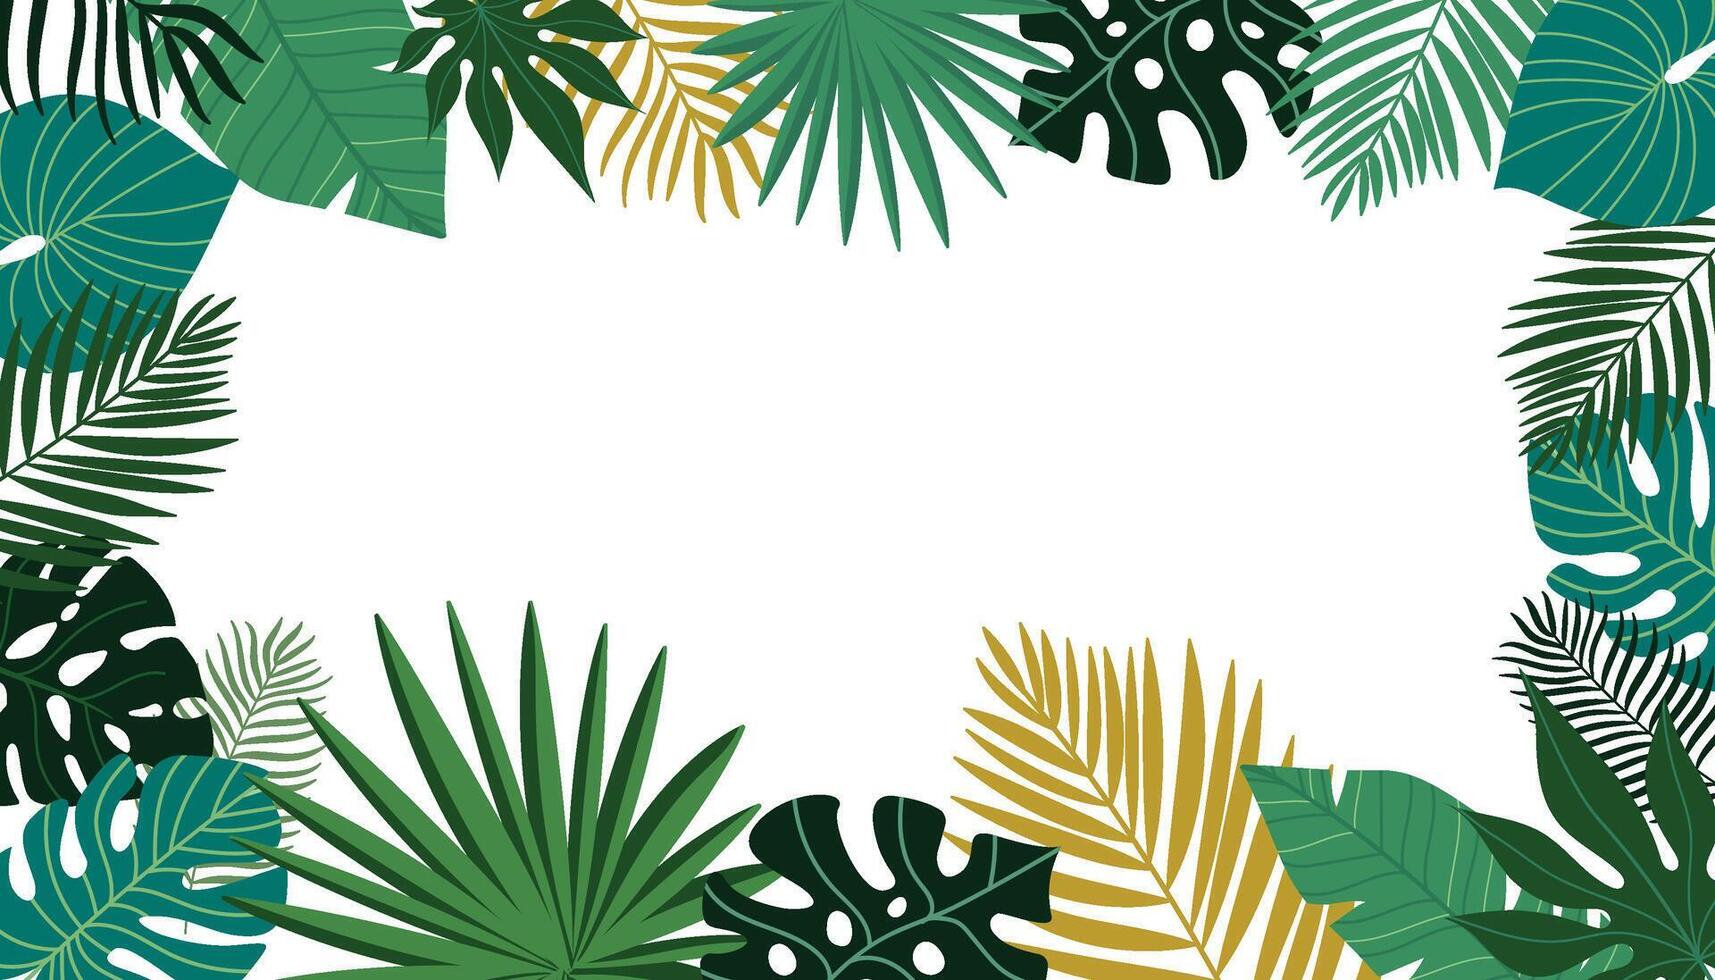 verano resumen fondo, bandera, póster con tropical hojas. selva exótico hojas. moderno de moda vistoso diseño. modelo para social medios de comunicación publicaciones vector